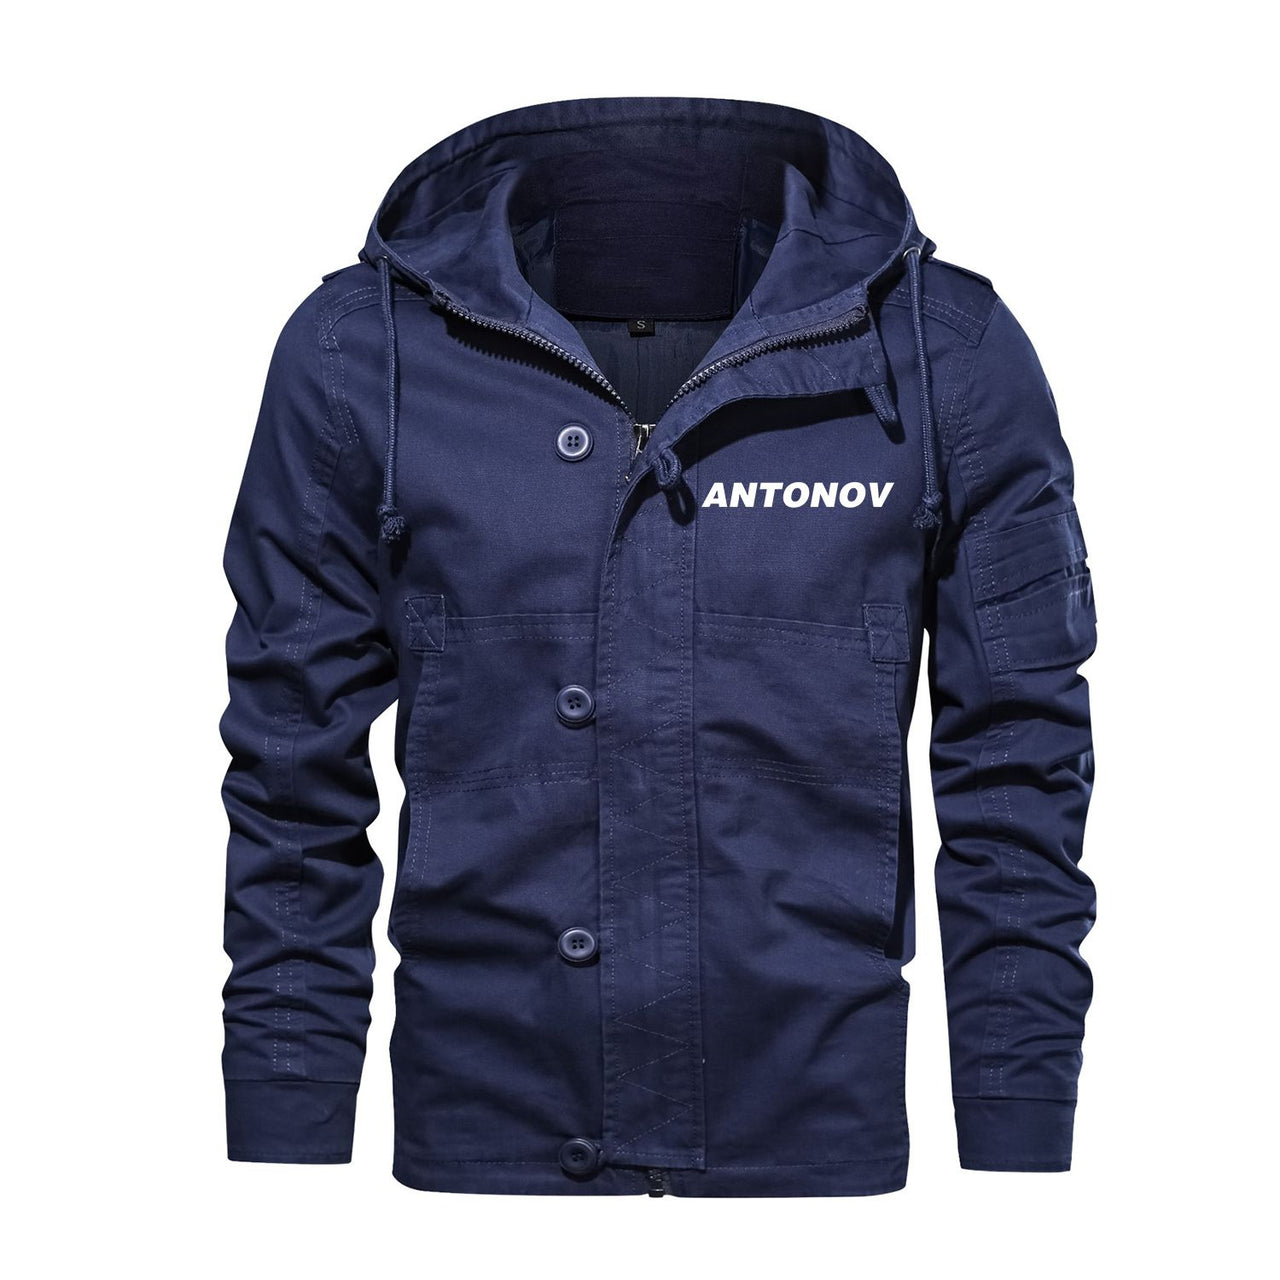 Antonov & Text Designed Cotton Jackets